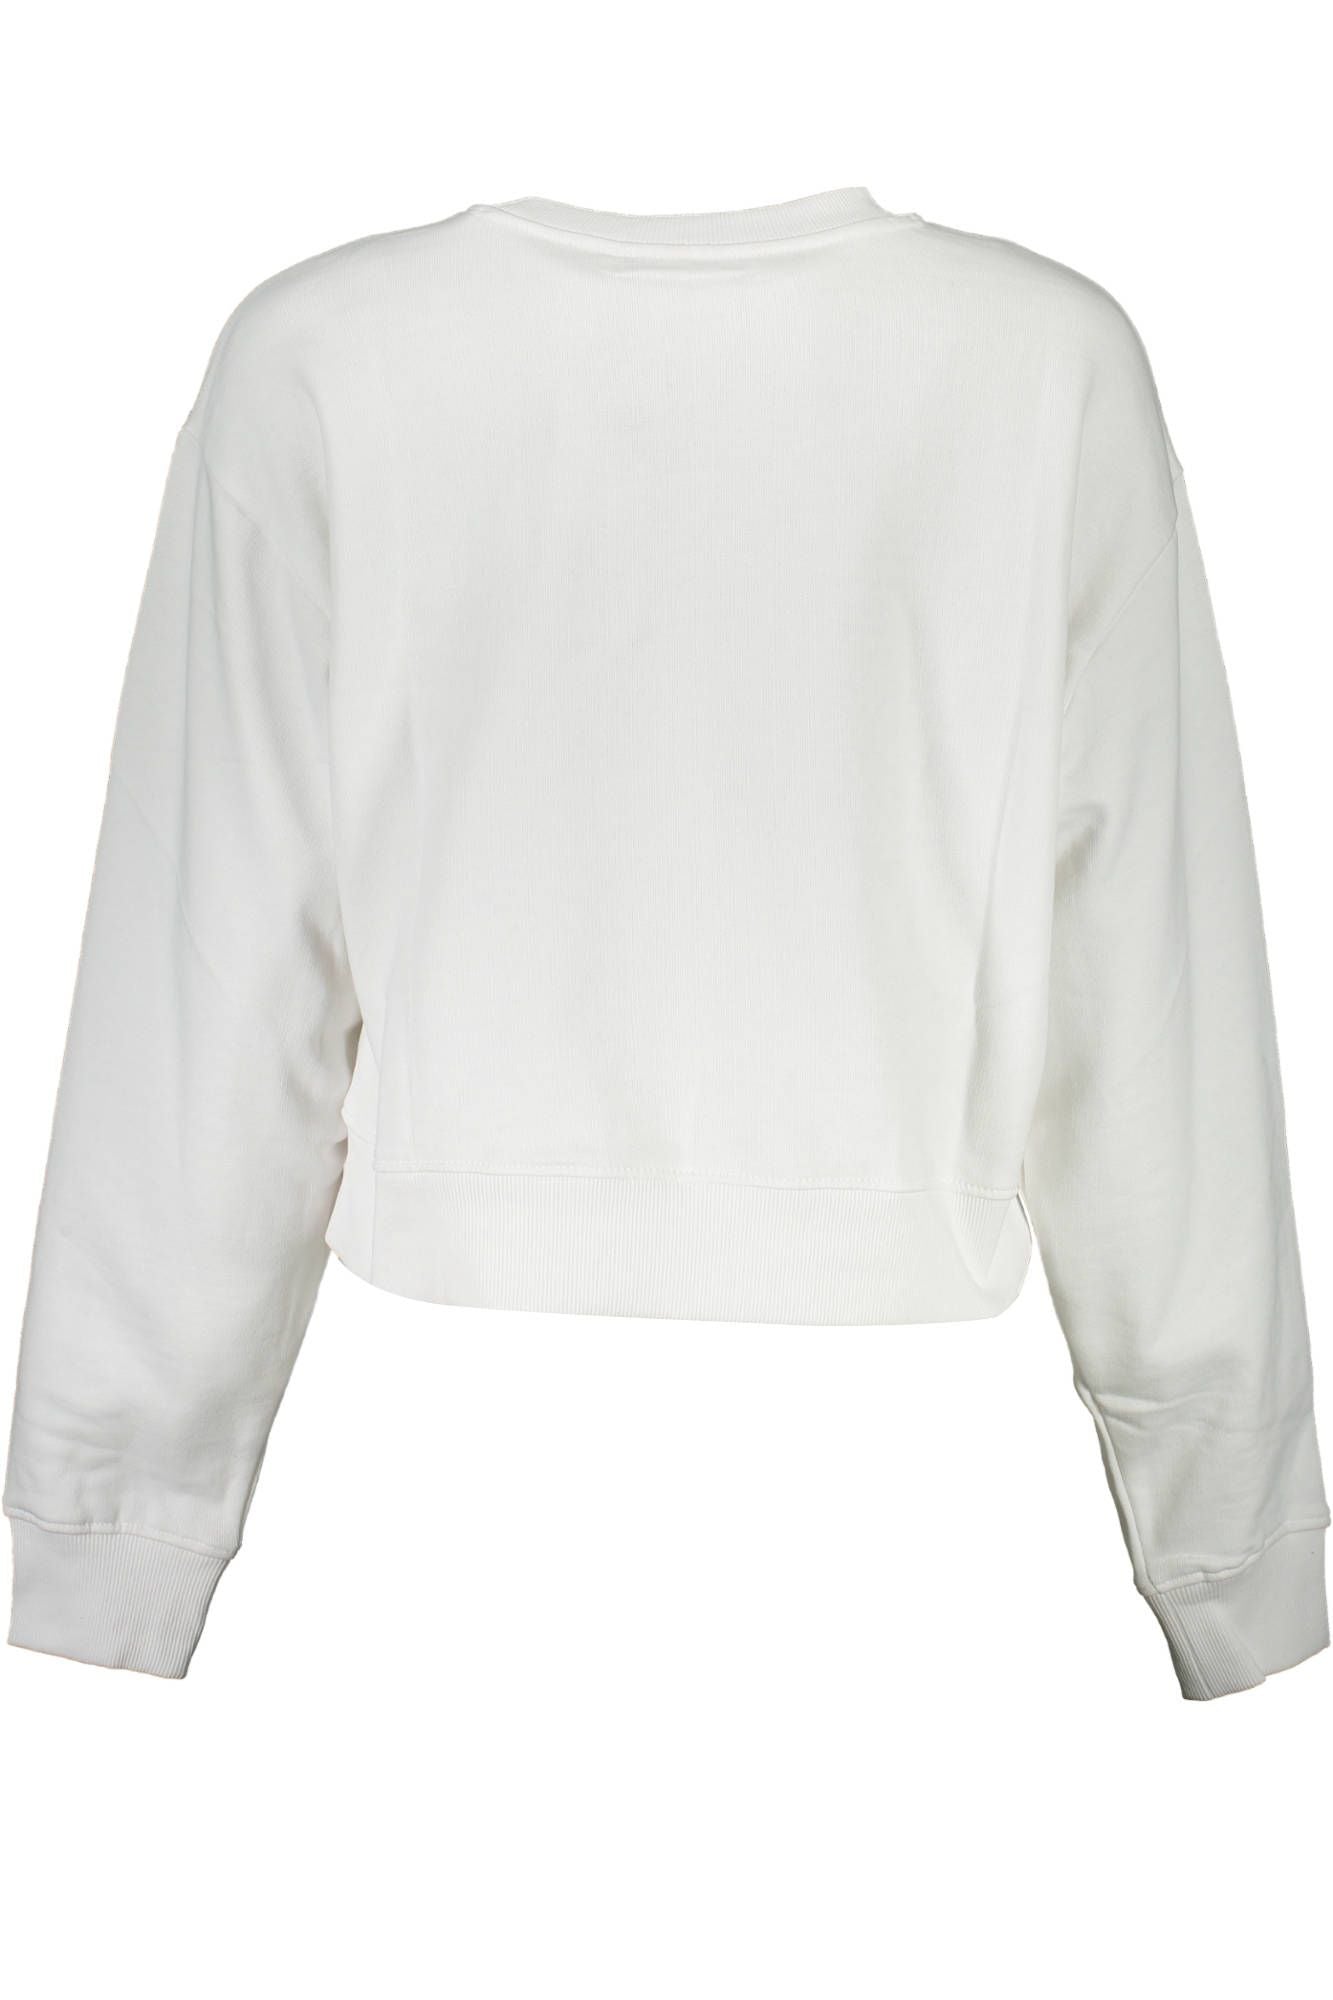 Chic White Cotton Sweatshirt with Logo Print